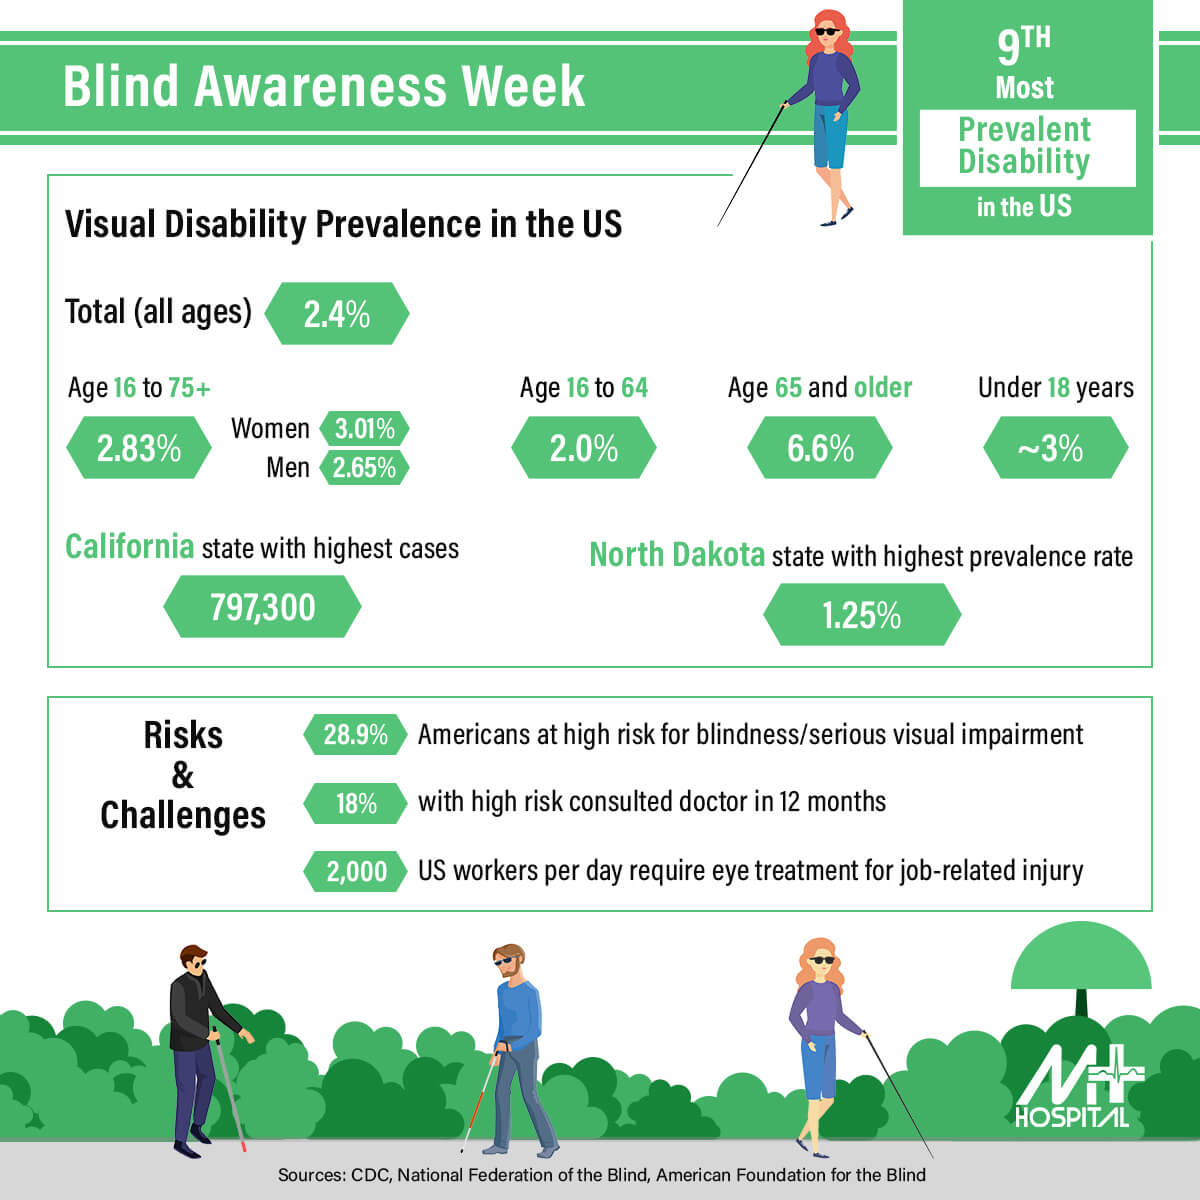 Blind Awareness Week